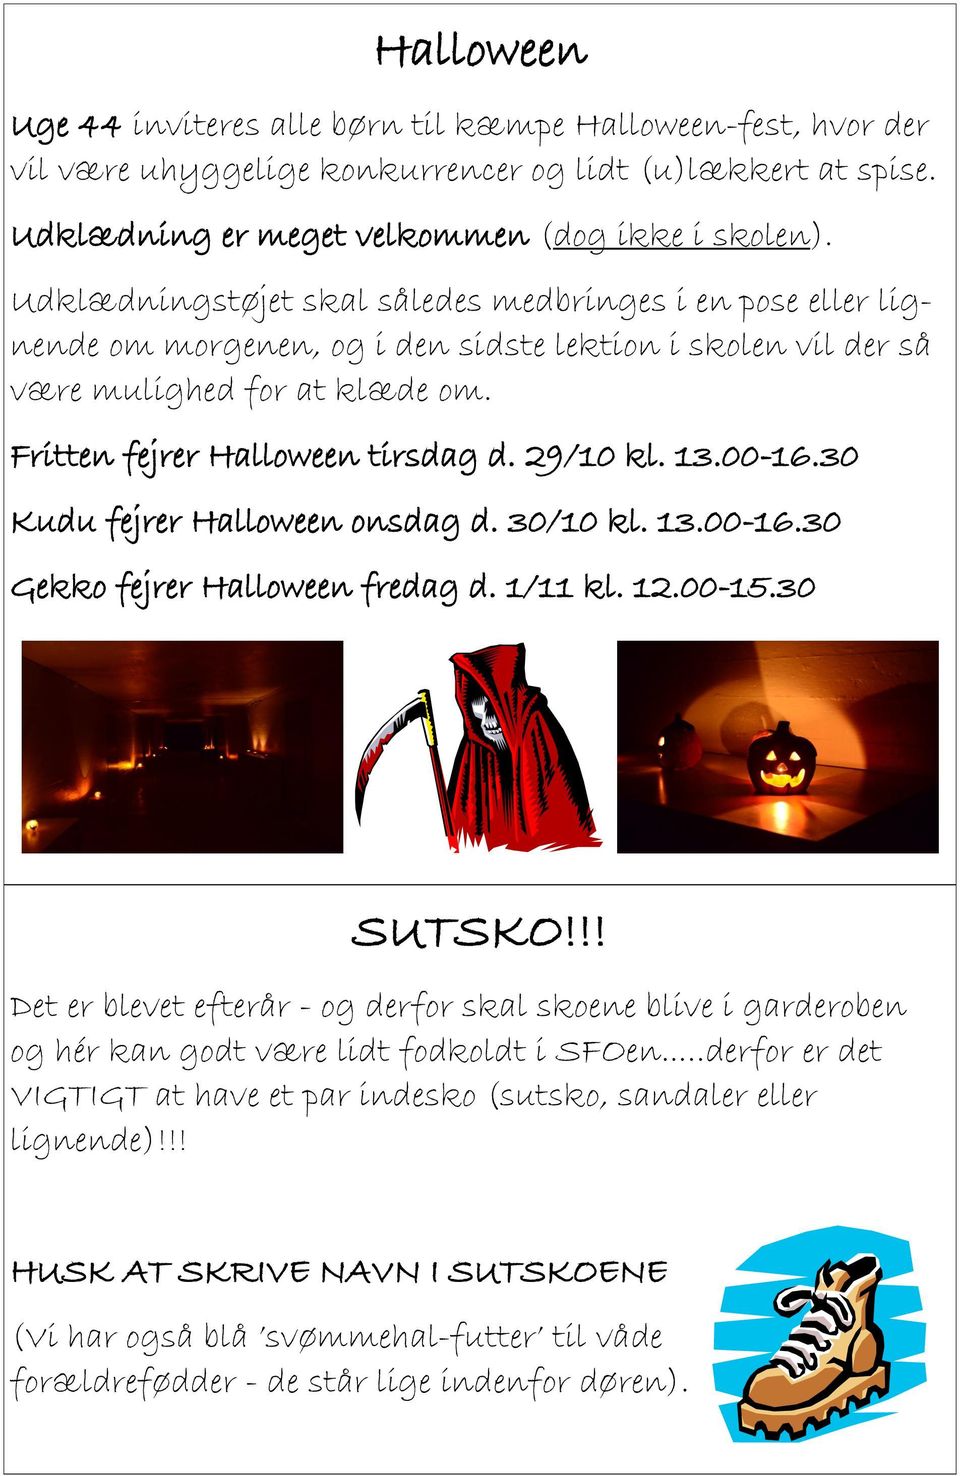 13.00-16.30 Kudu fejrer Halloween onsdag d. 30/10 kl. 13.00-16.30 Gekko fejrer Halloween fredag d. 1/11 kl. 12.00-15.30 SUTSKO!